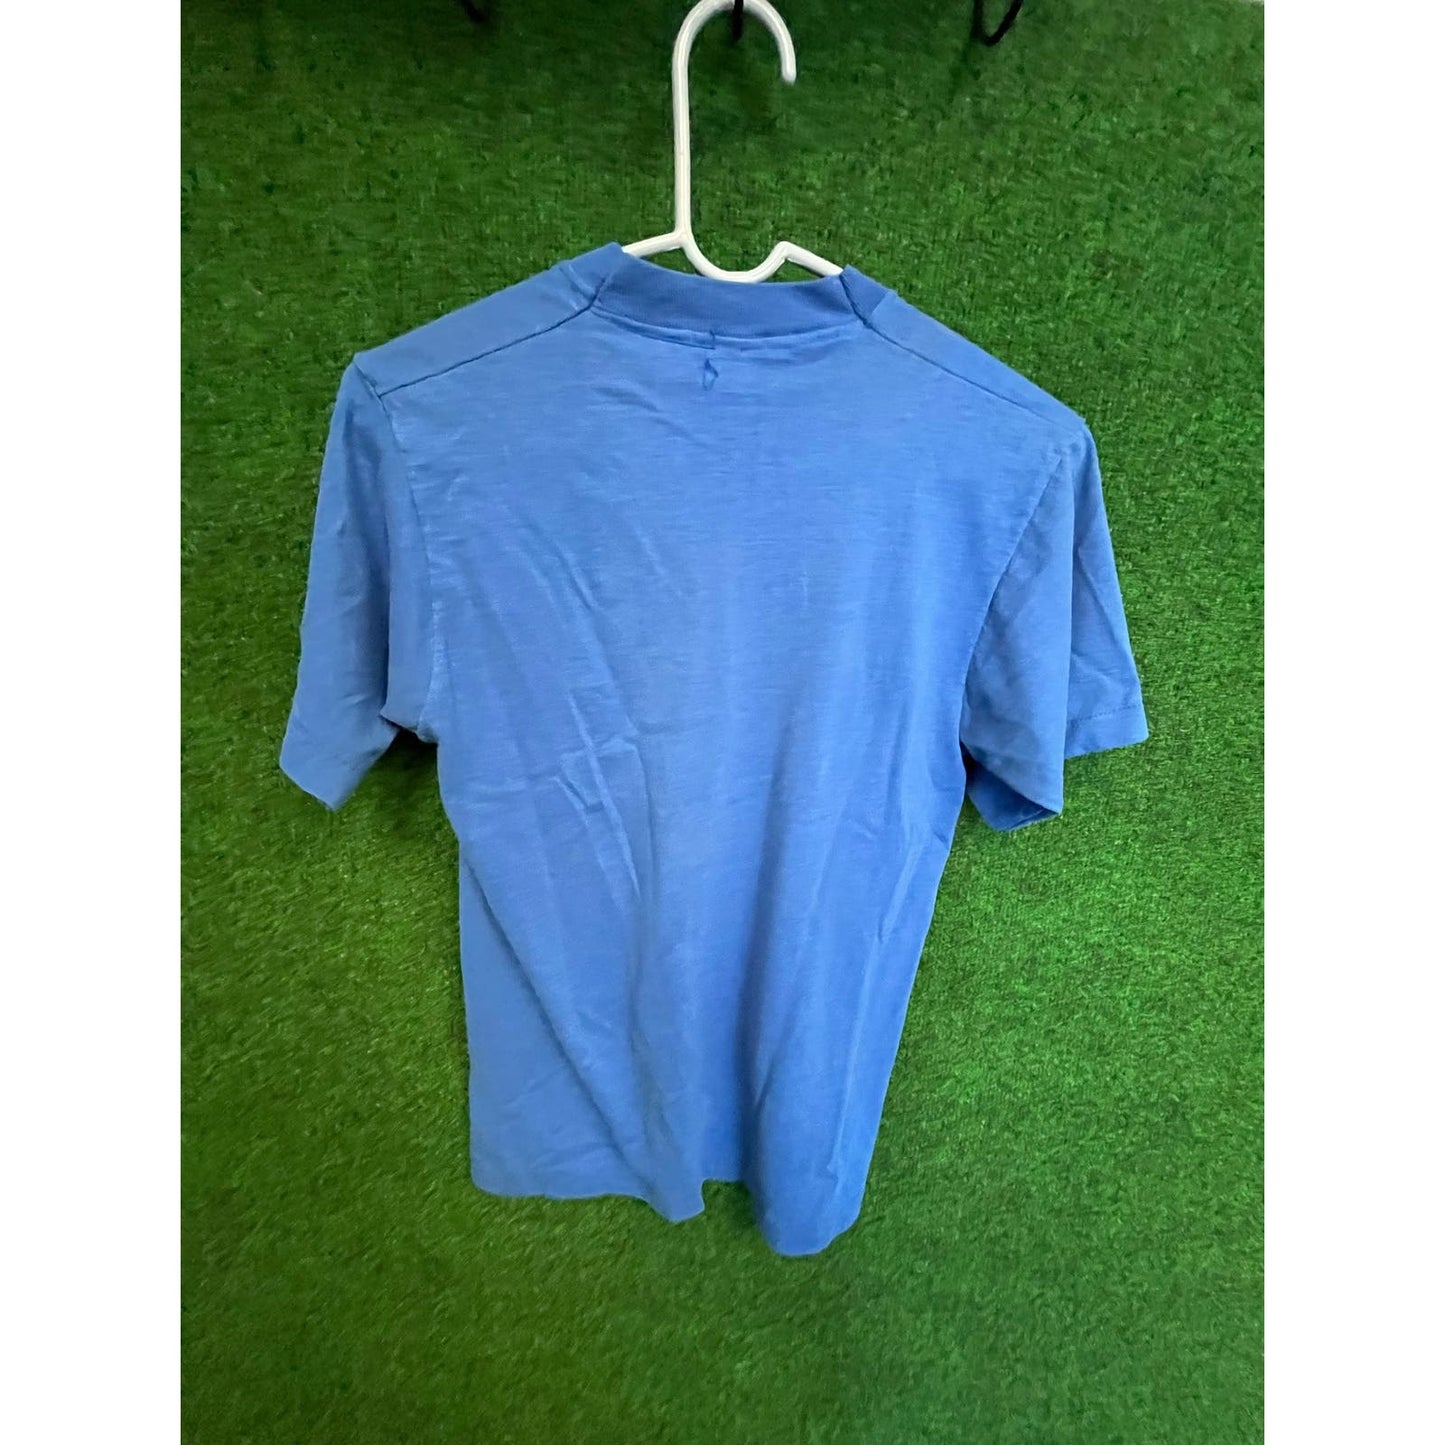 Lady's 90s Oxford University Blue Extra Small XS T-Shirt